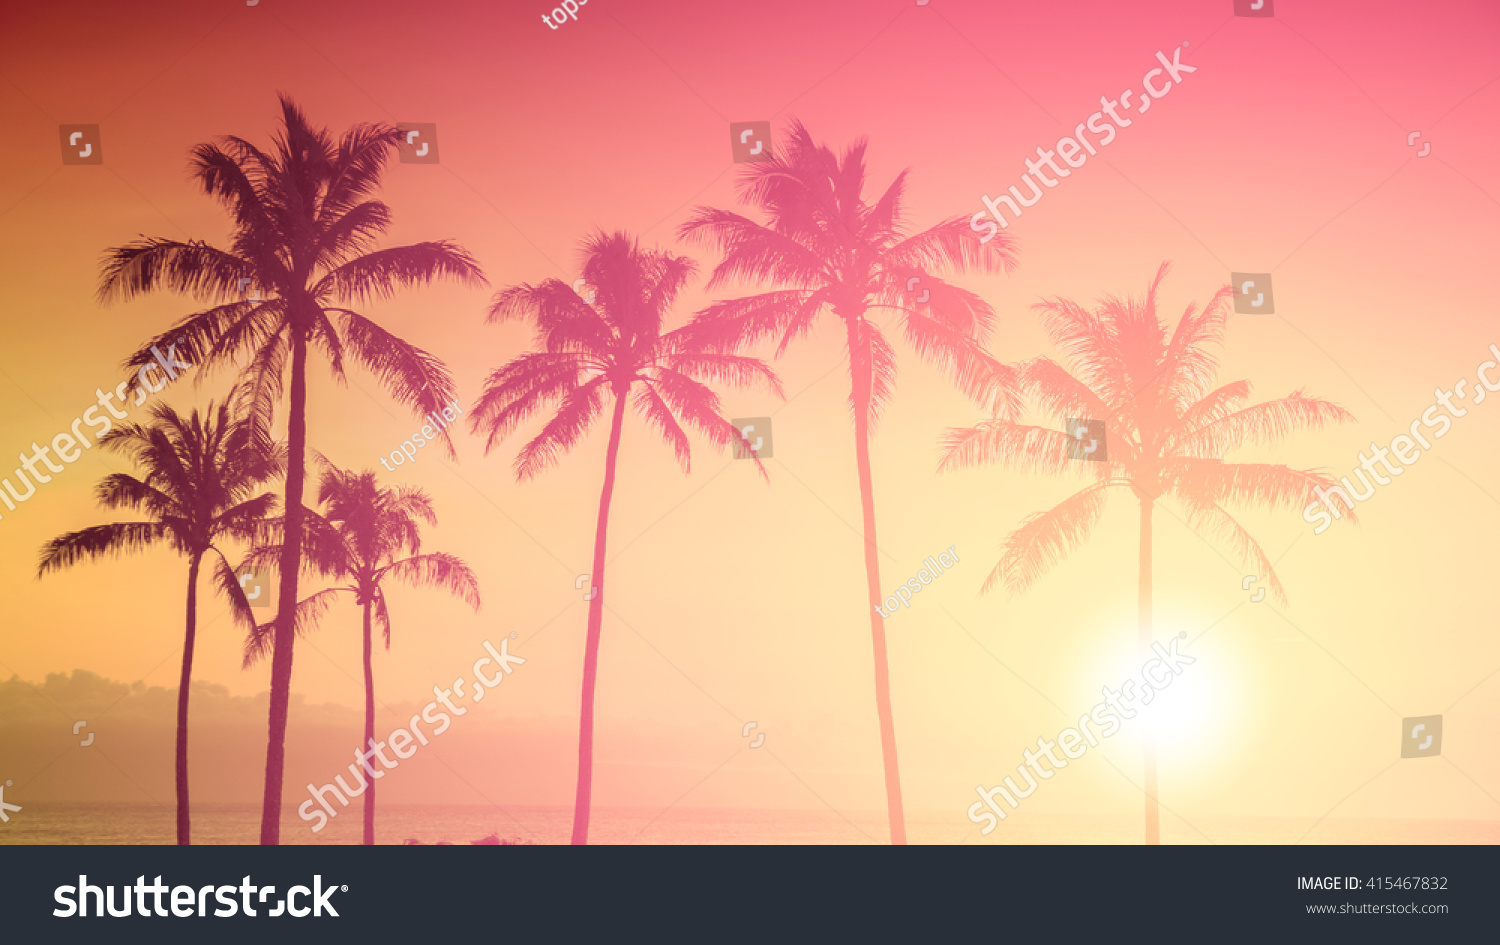 Tropical sunset #415467832